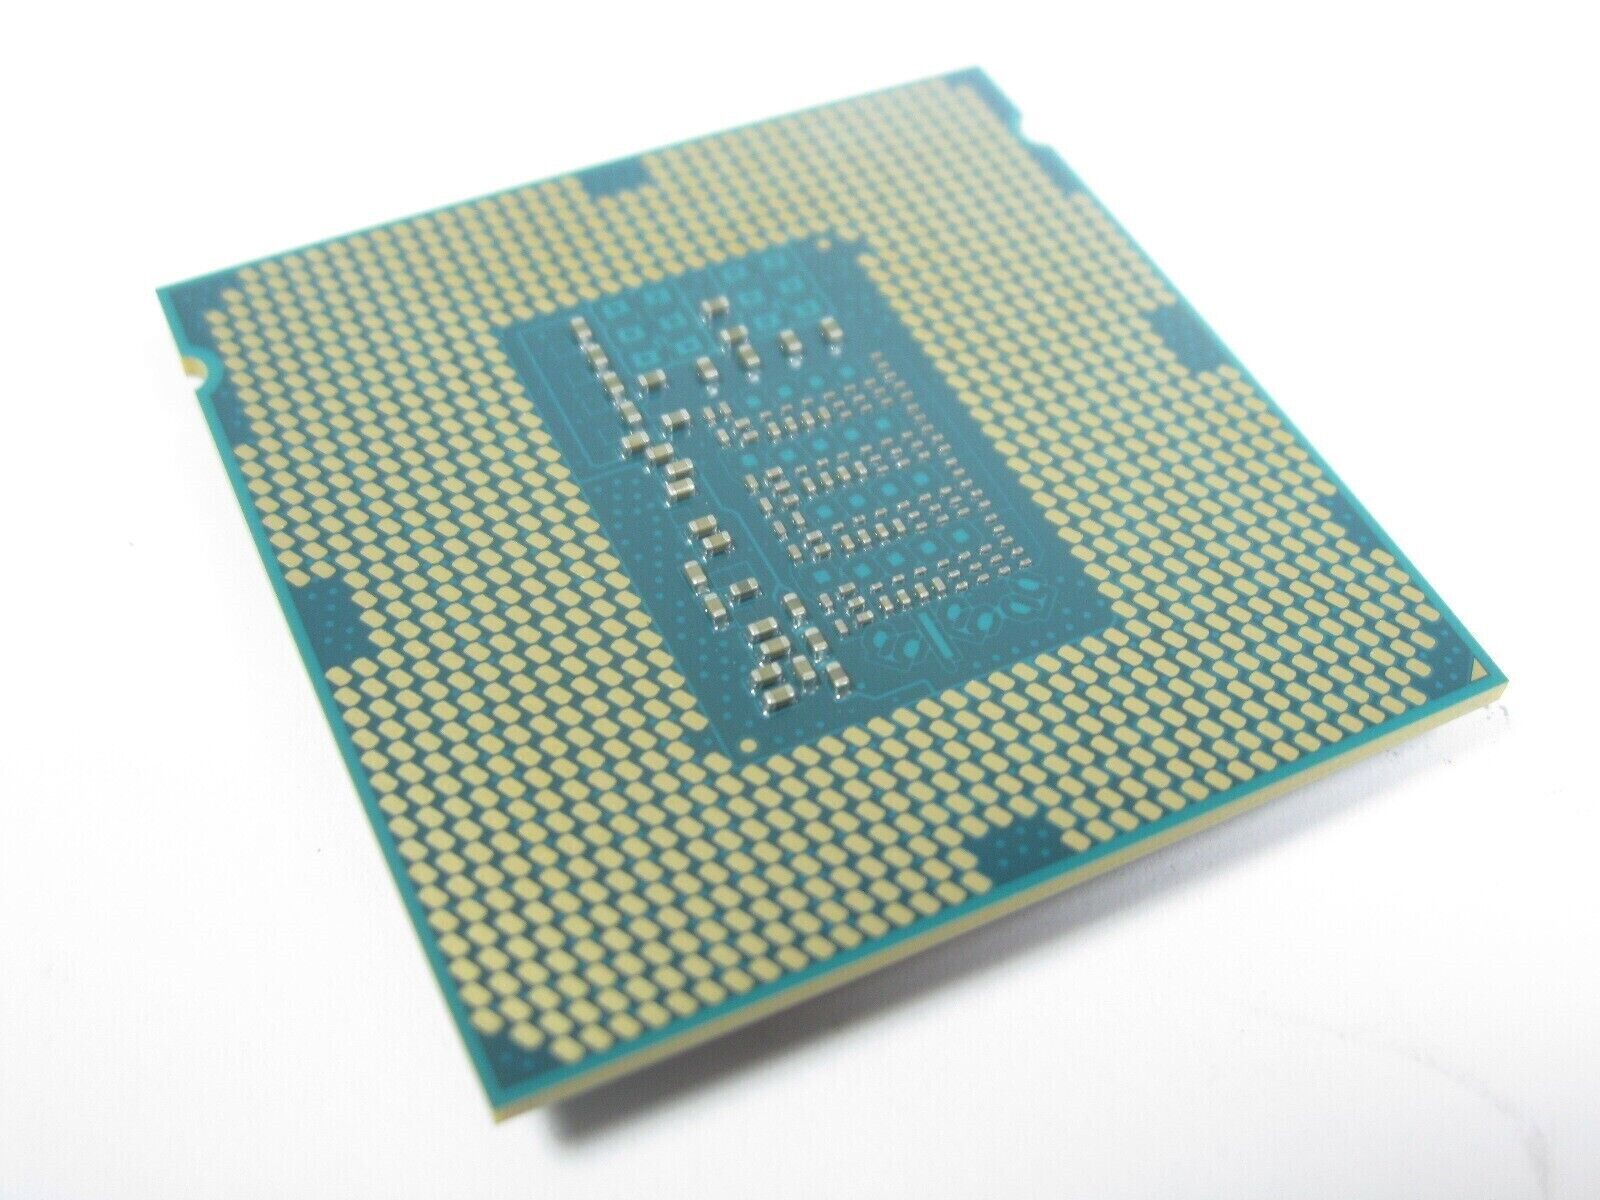 Lot of 3 x Intel Core i7 4770 3.4GHz SR149 CPU Processor